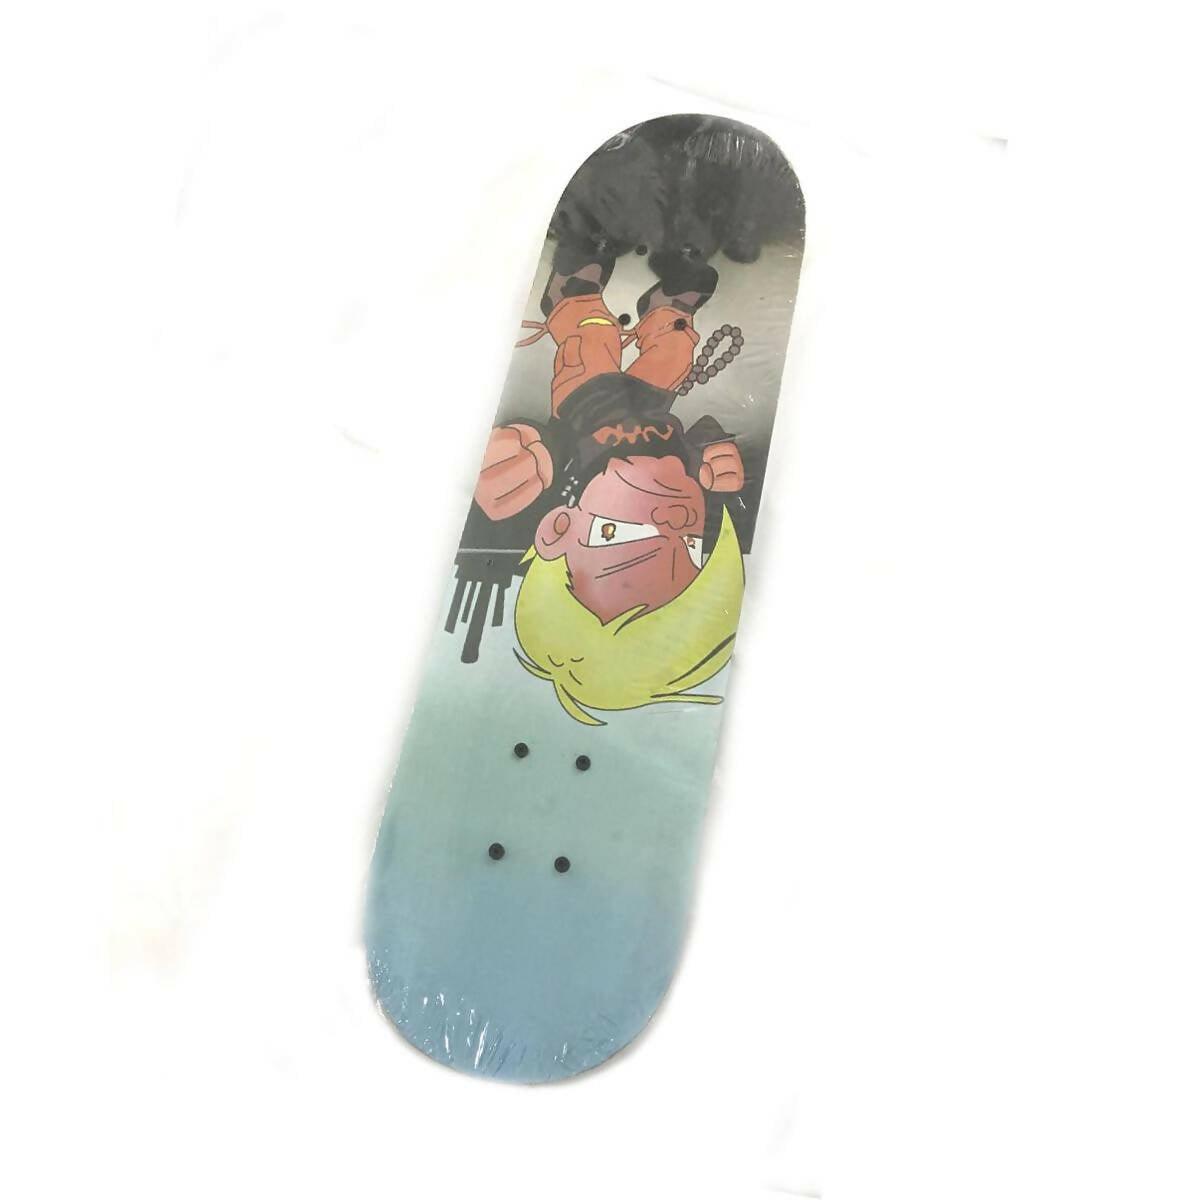 Large - Wooden Skateboard 27" for Teens Adults Beginners Girls Boys Kids